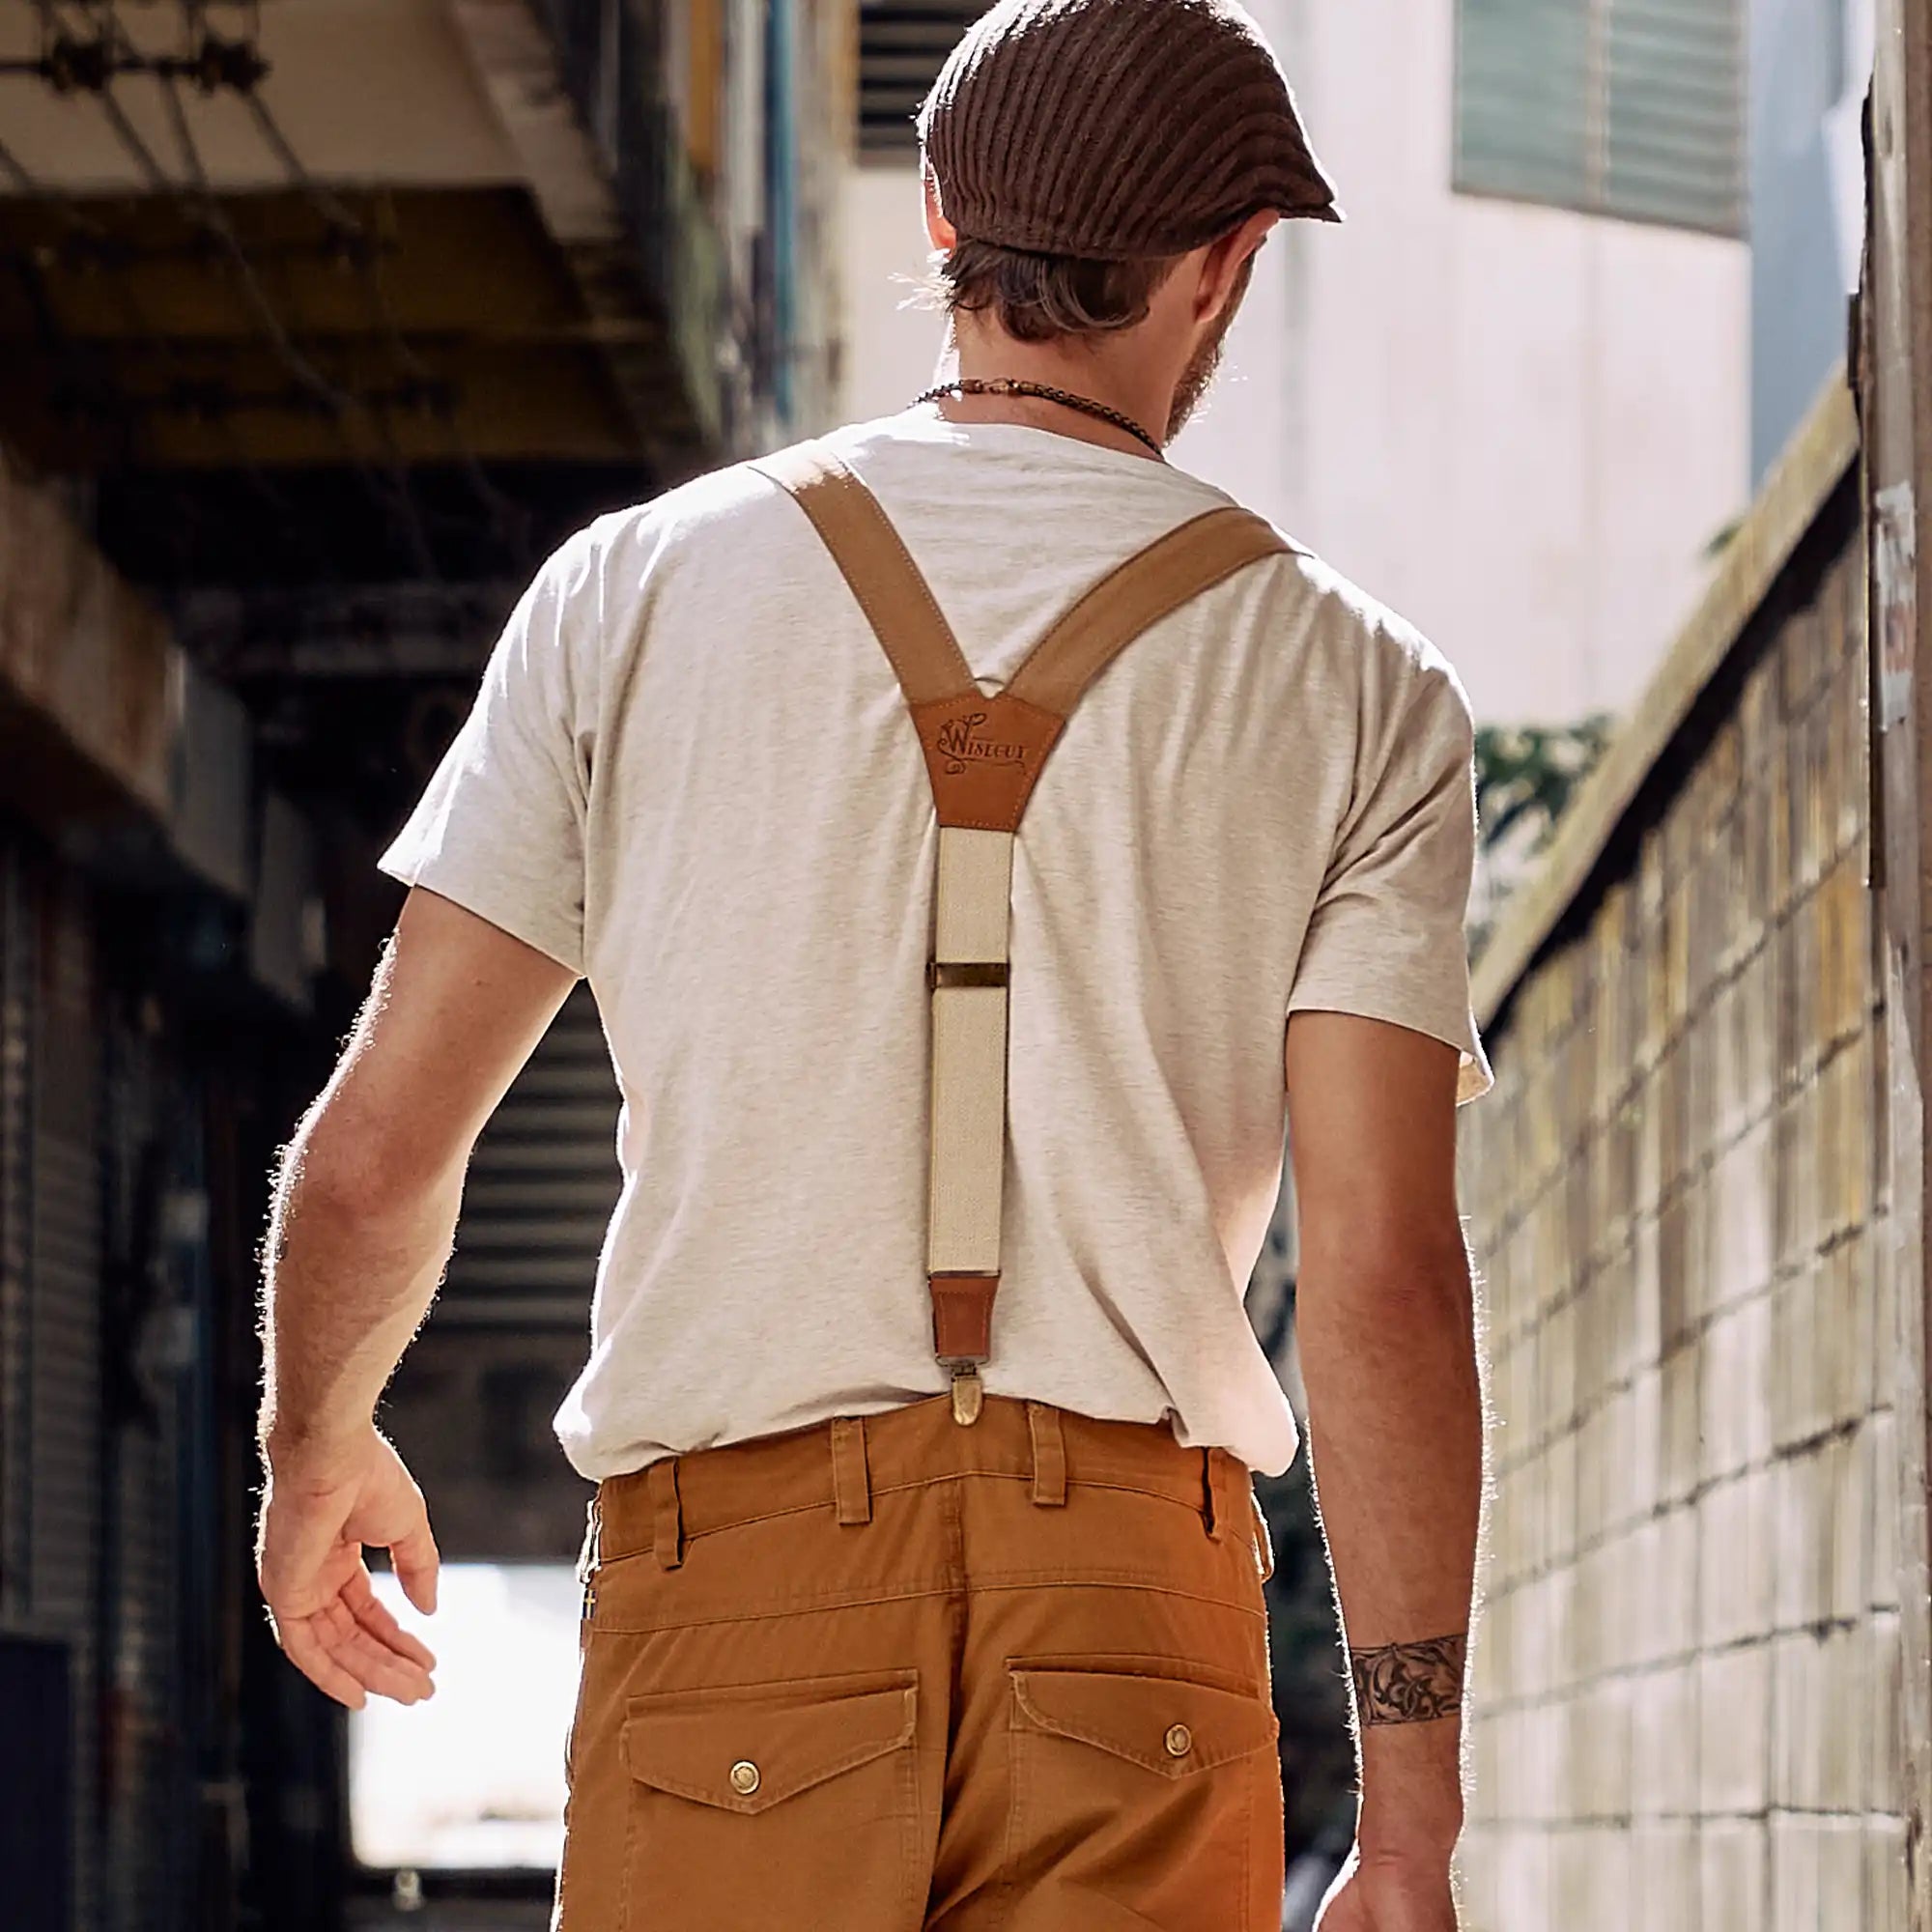 Man walking through streets wearing a flat cap and Wiseguy Original Suspenders